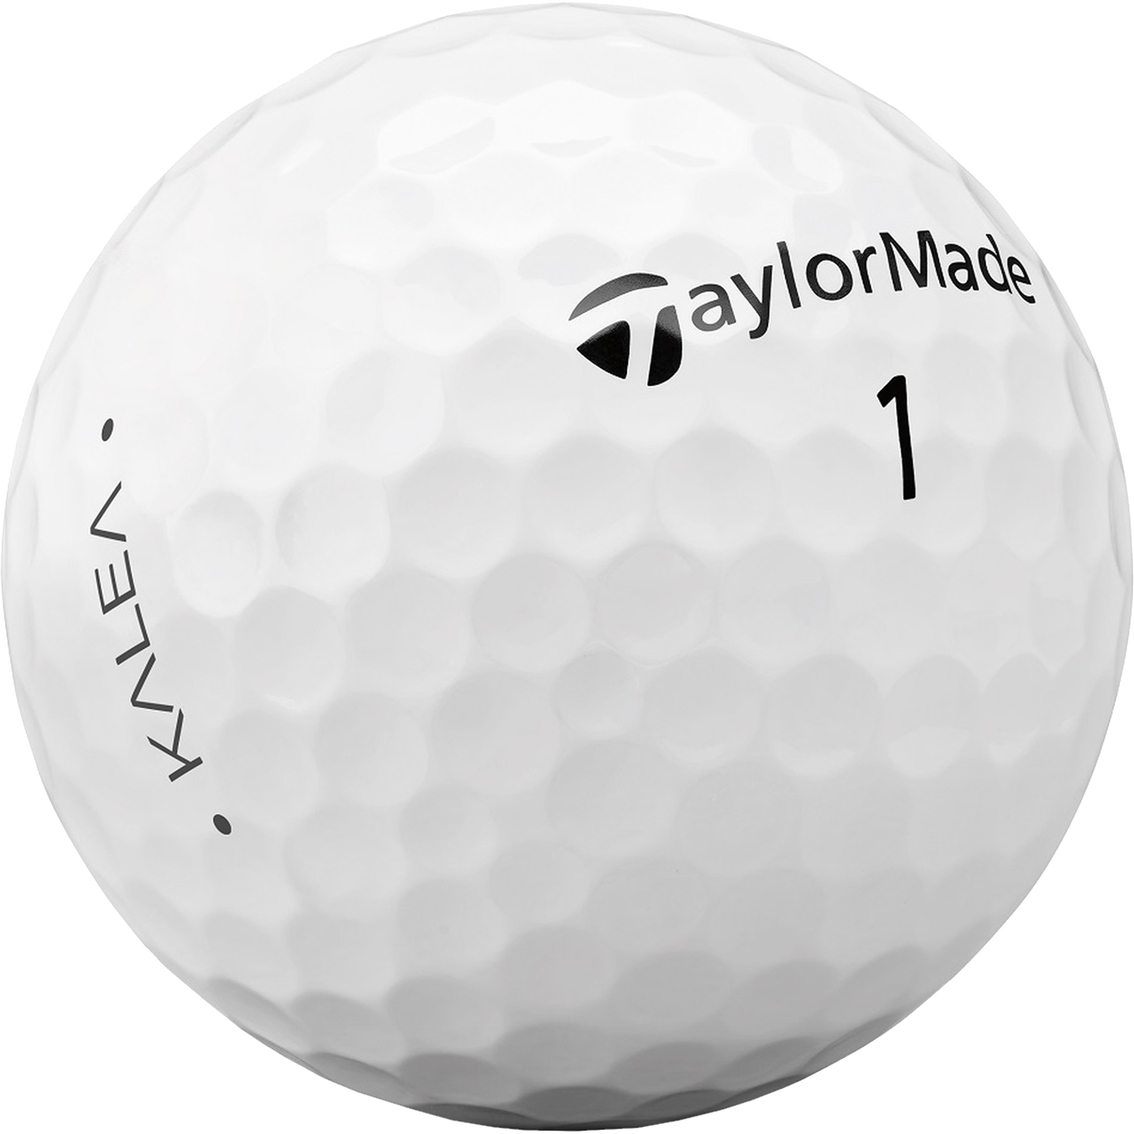 Taylormade Kalea Golf Balls - Image 3 of 3